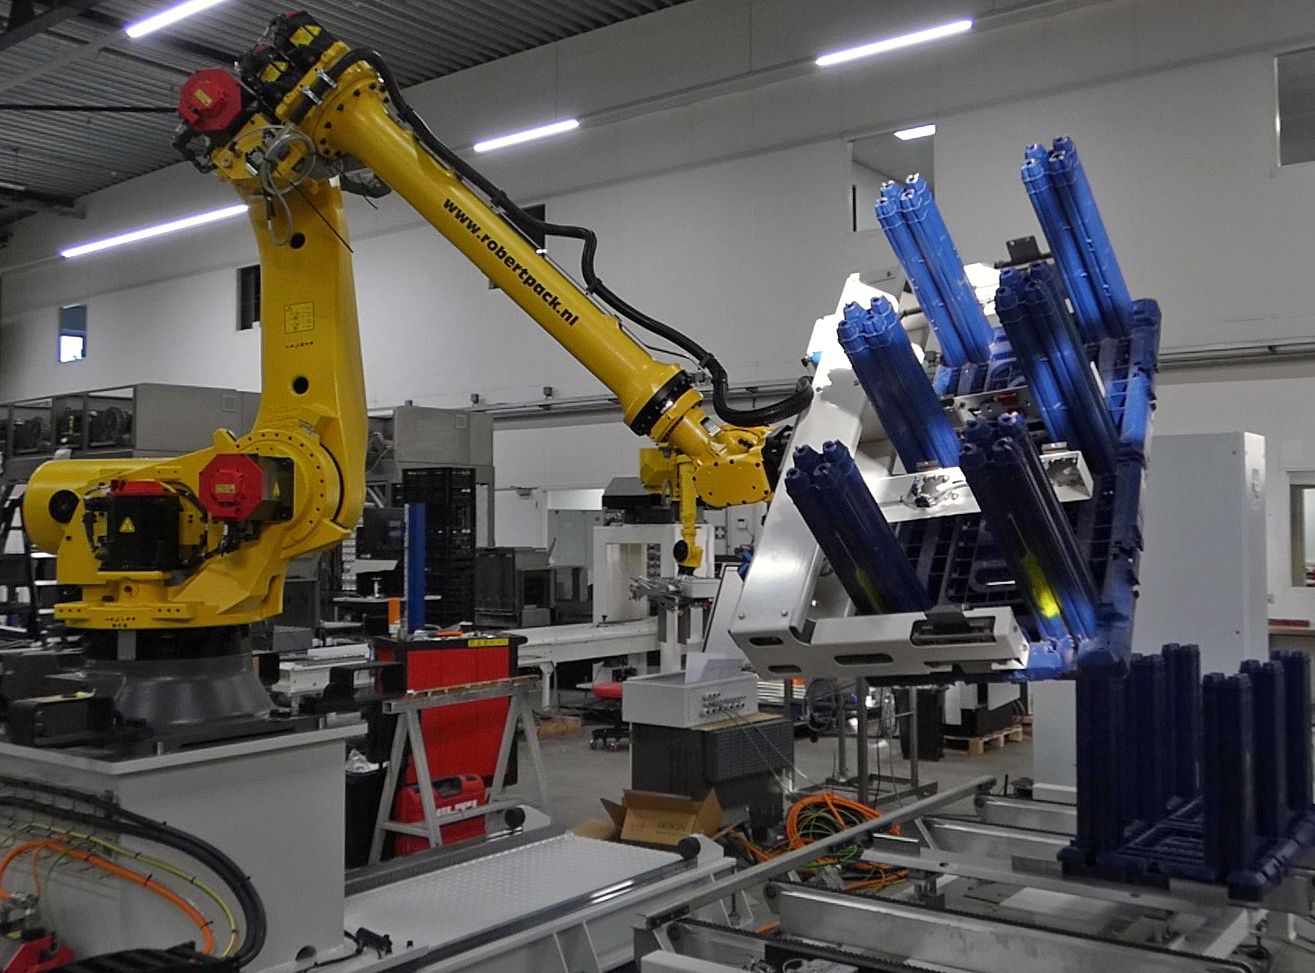 Robertpack-Fanuc-handling-robot-in-the-non-food-industry